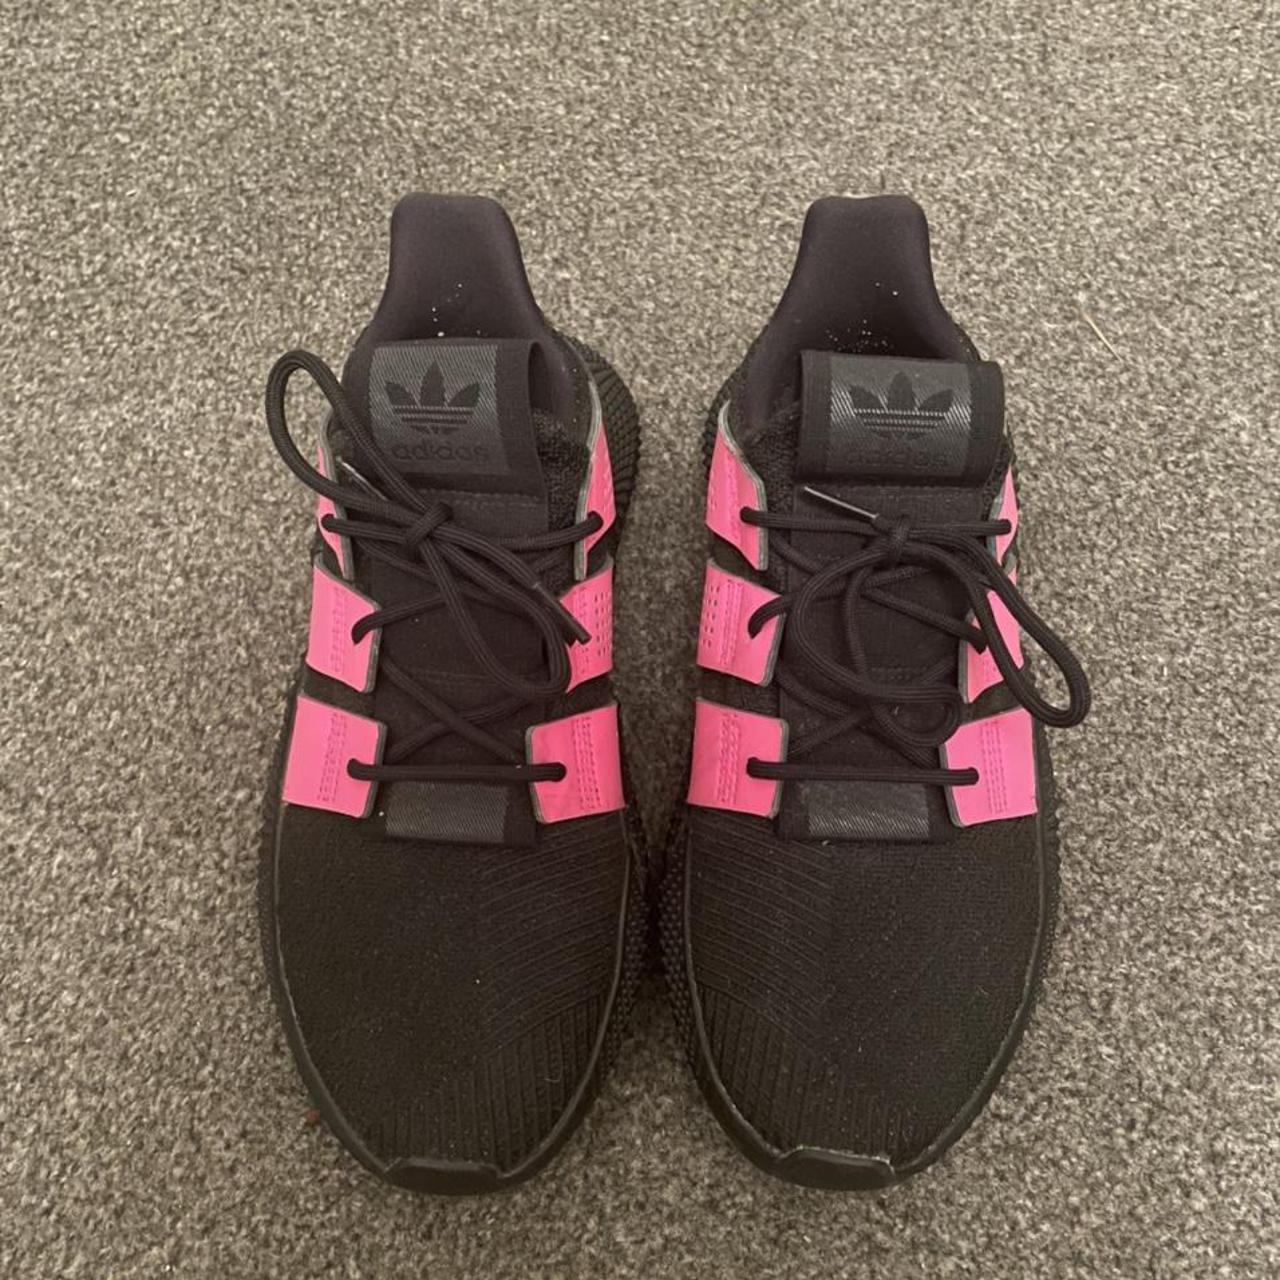 Adidas and Pink | Depop